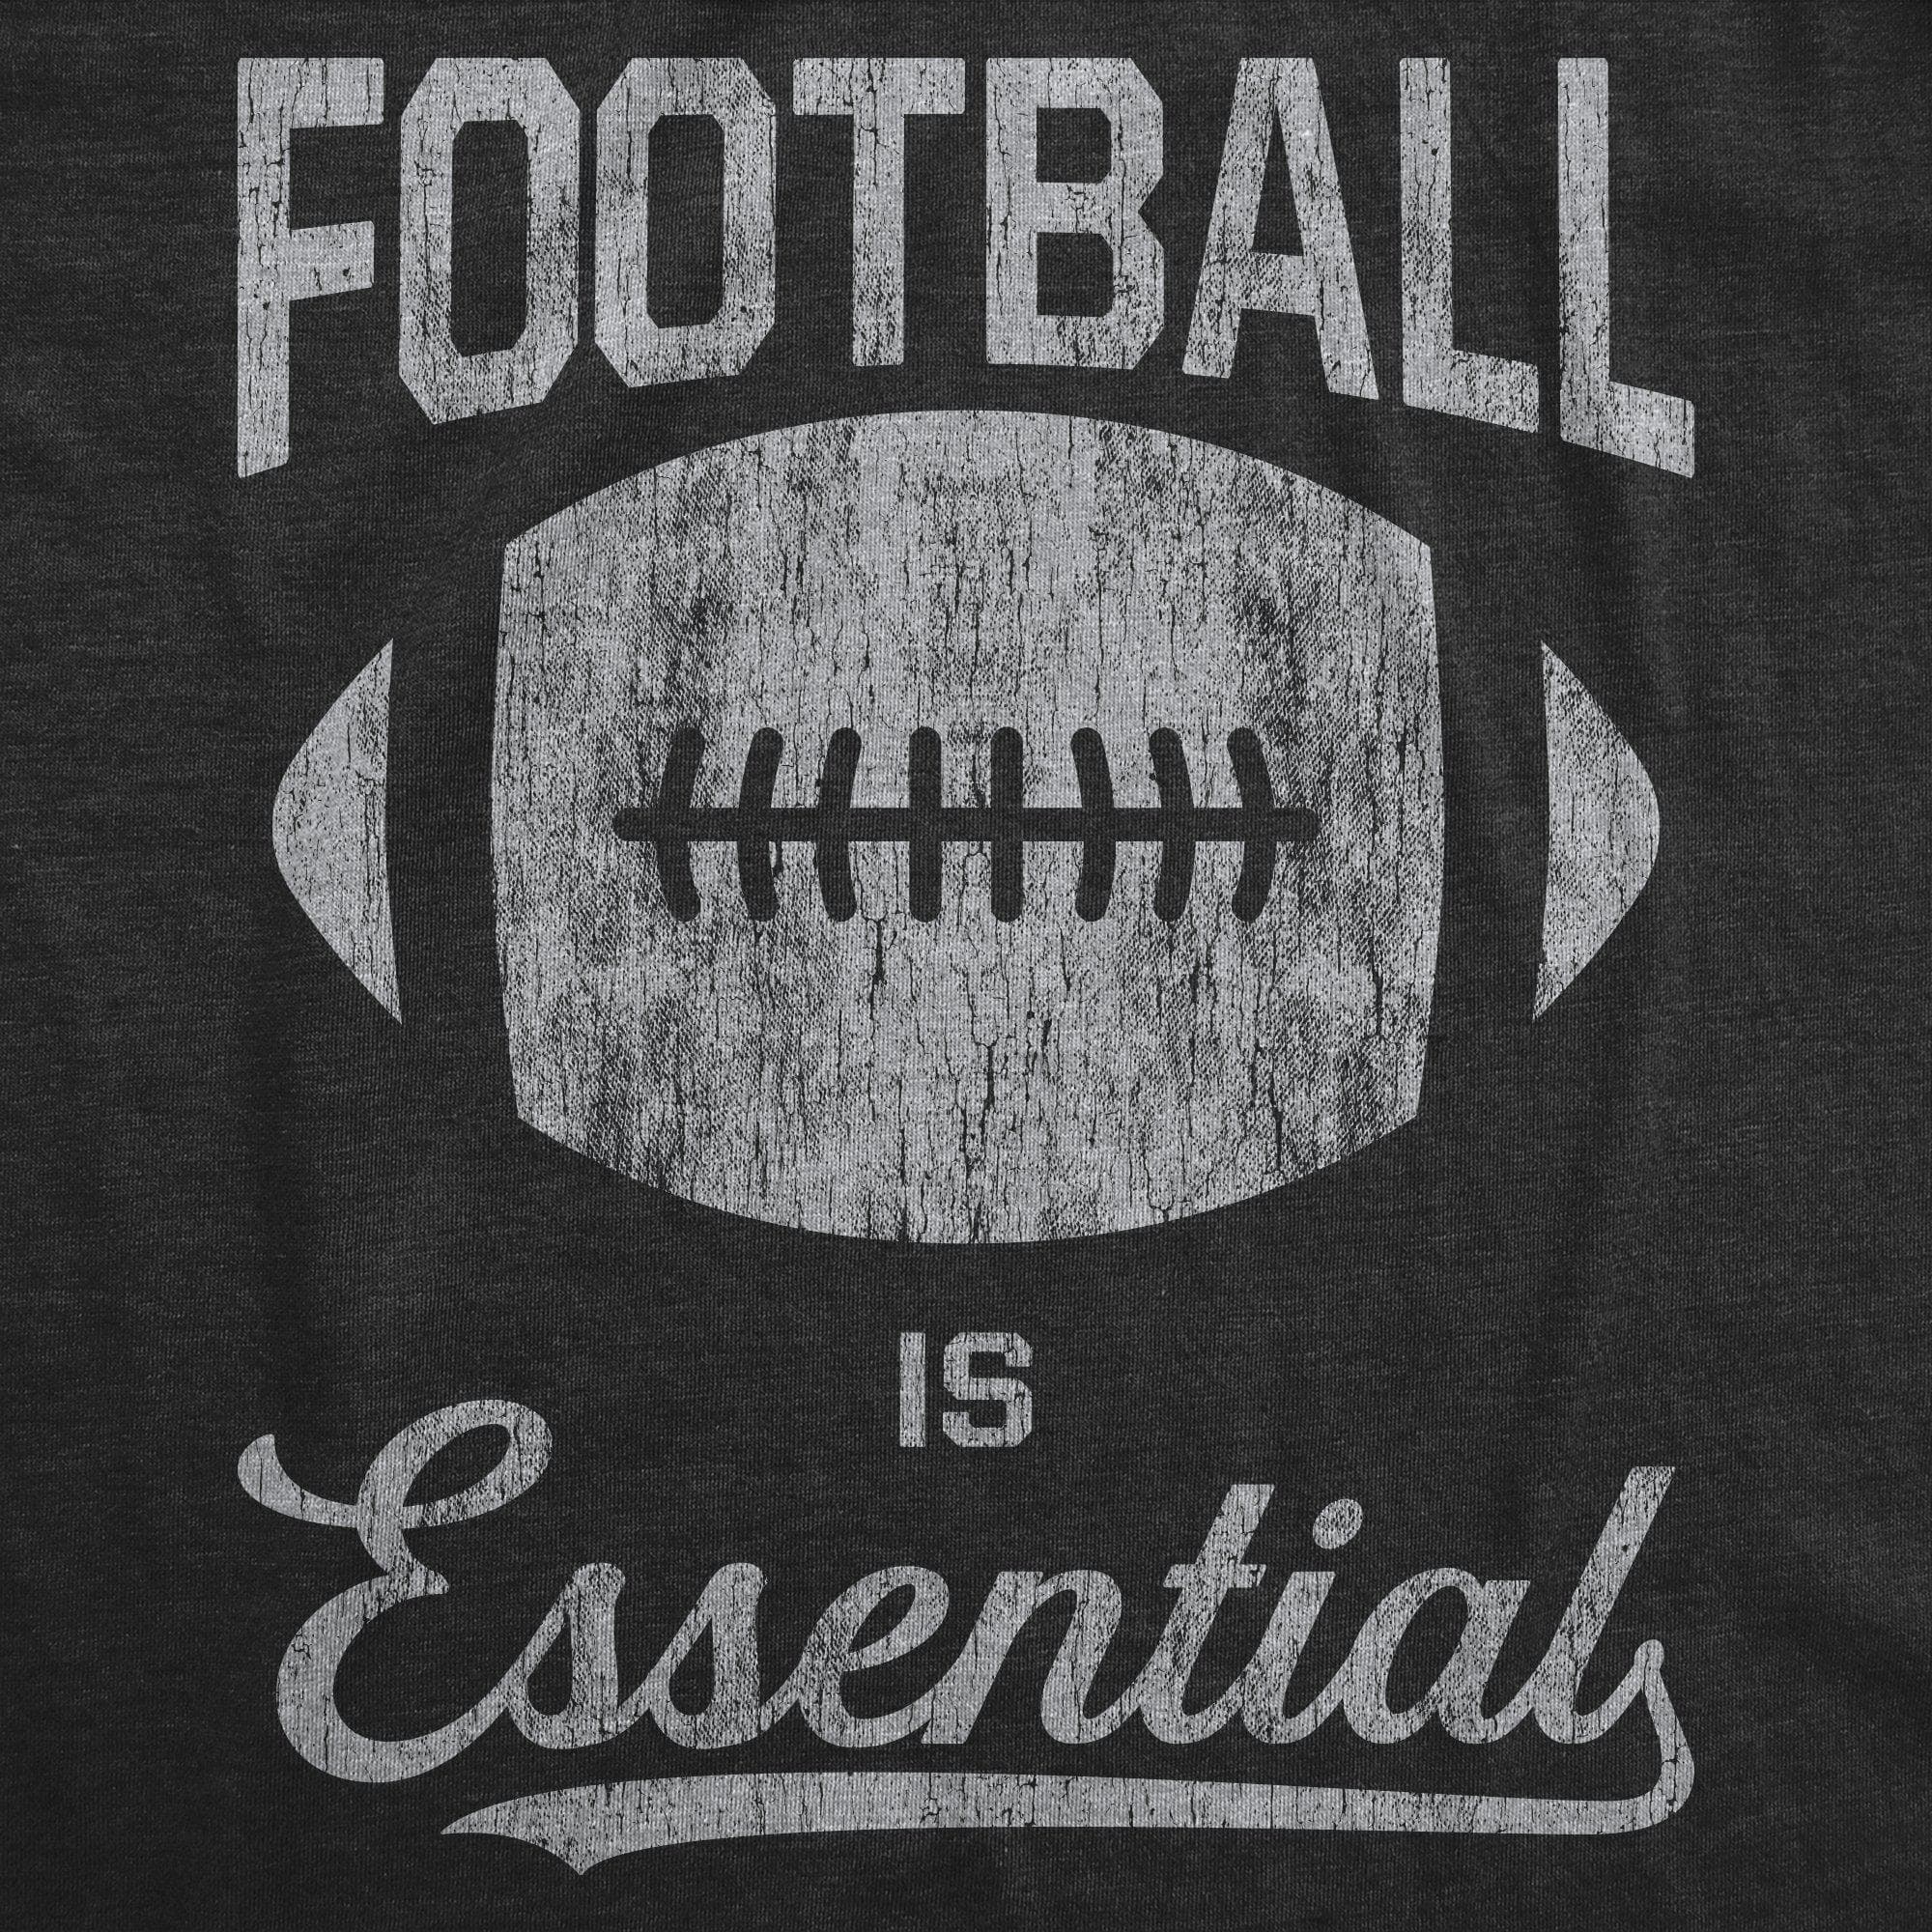 Football Is Essential Men's Tshirt - Crazy Dog T-Shirts